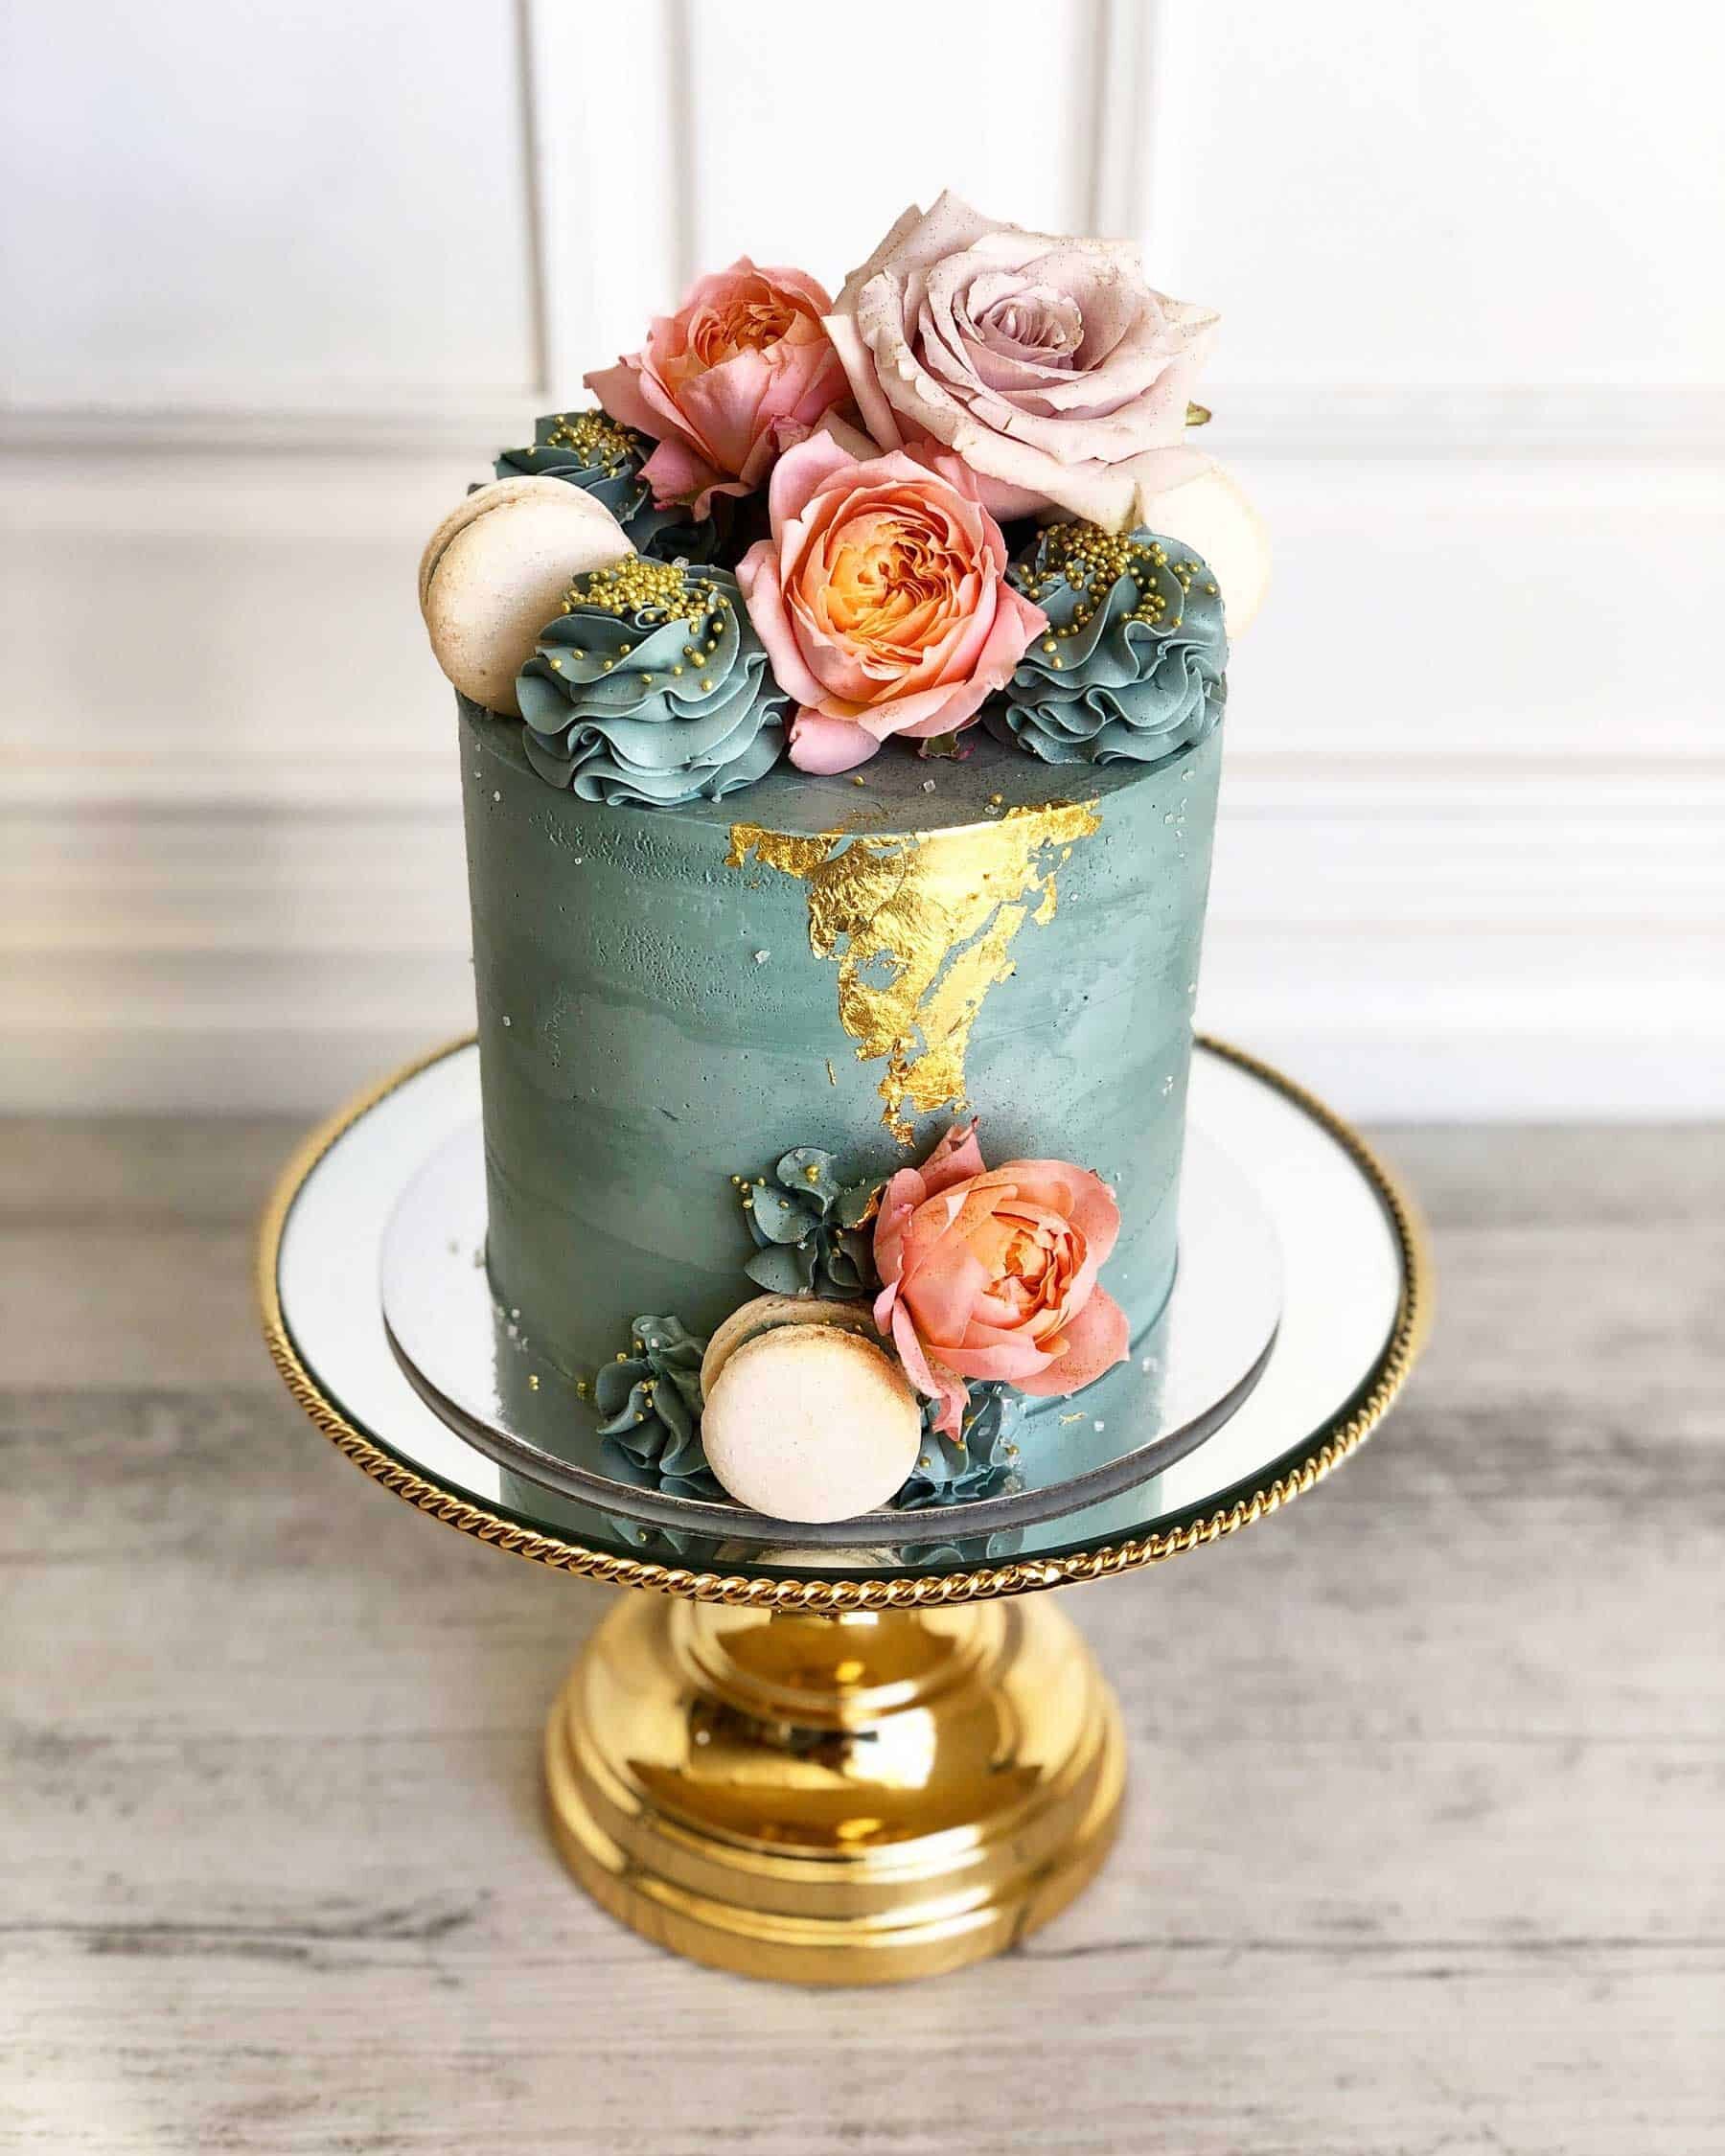 Posh Little Cakes - artisnal wedding cakes, Perth - Posh Little Cakes